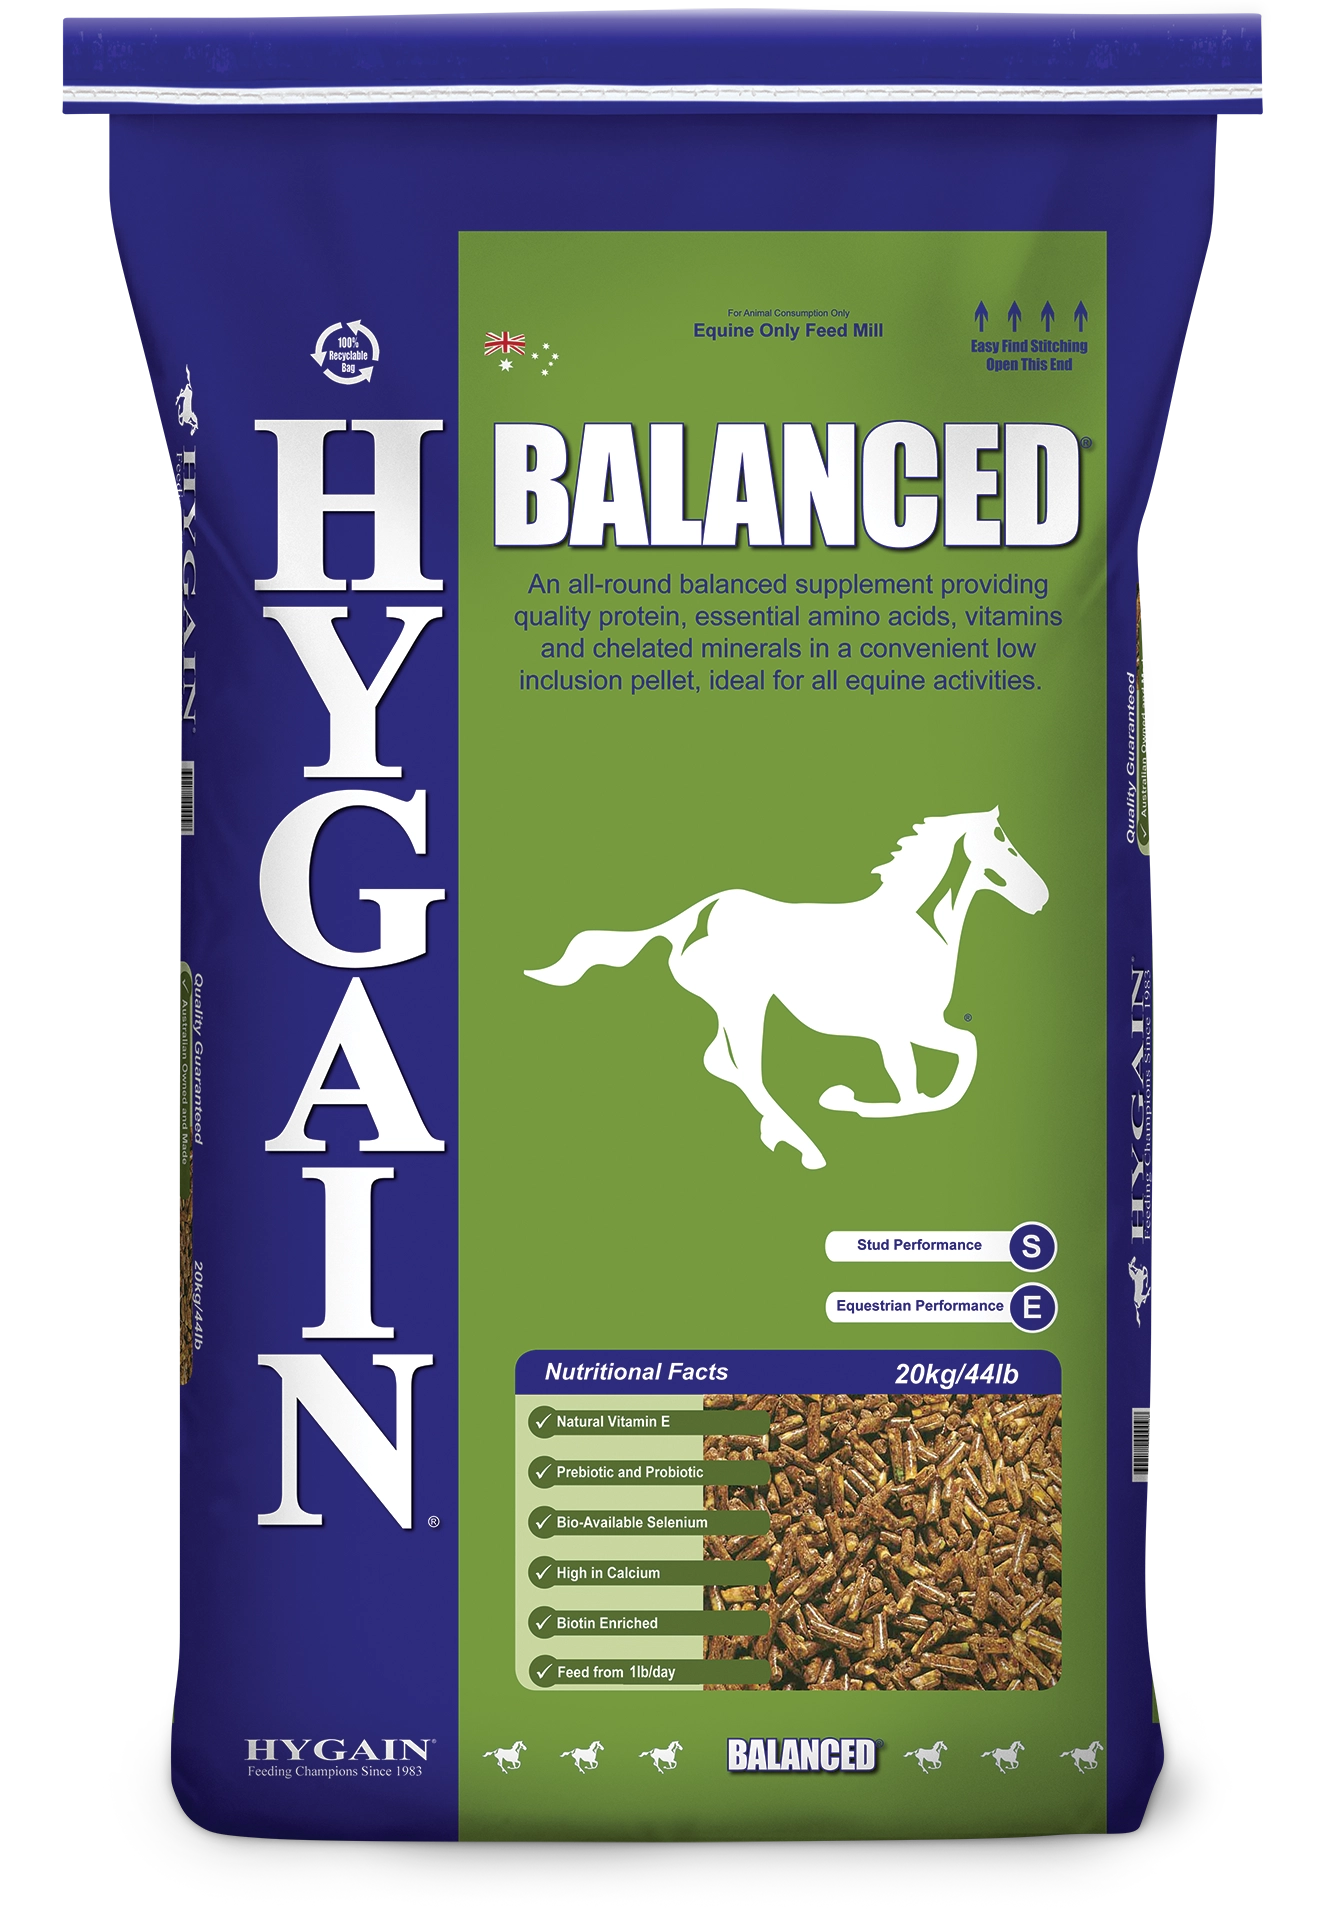 Hygain Balanced bag